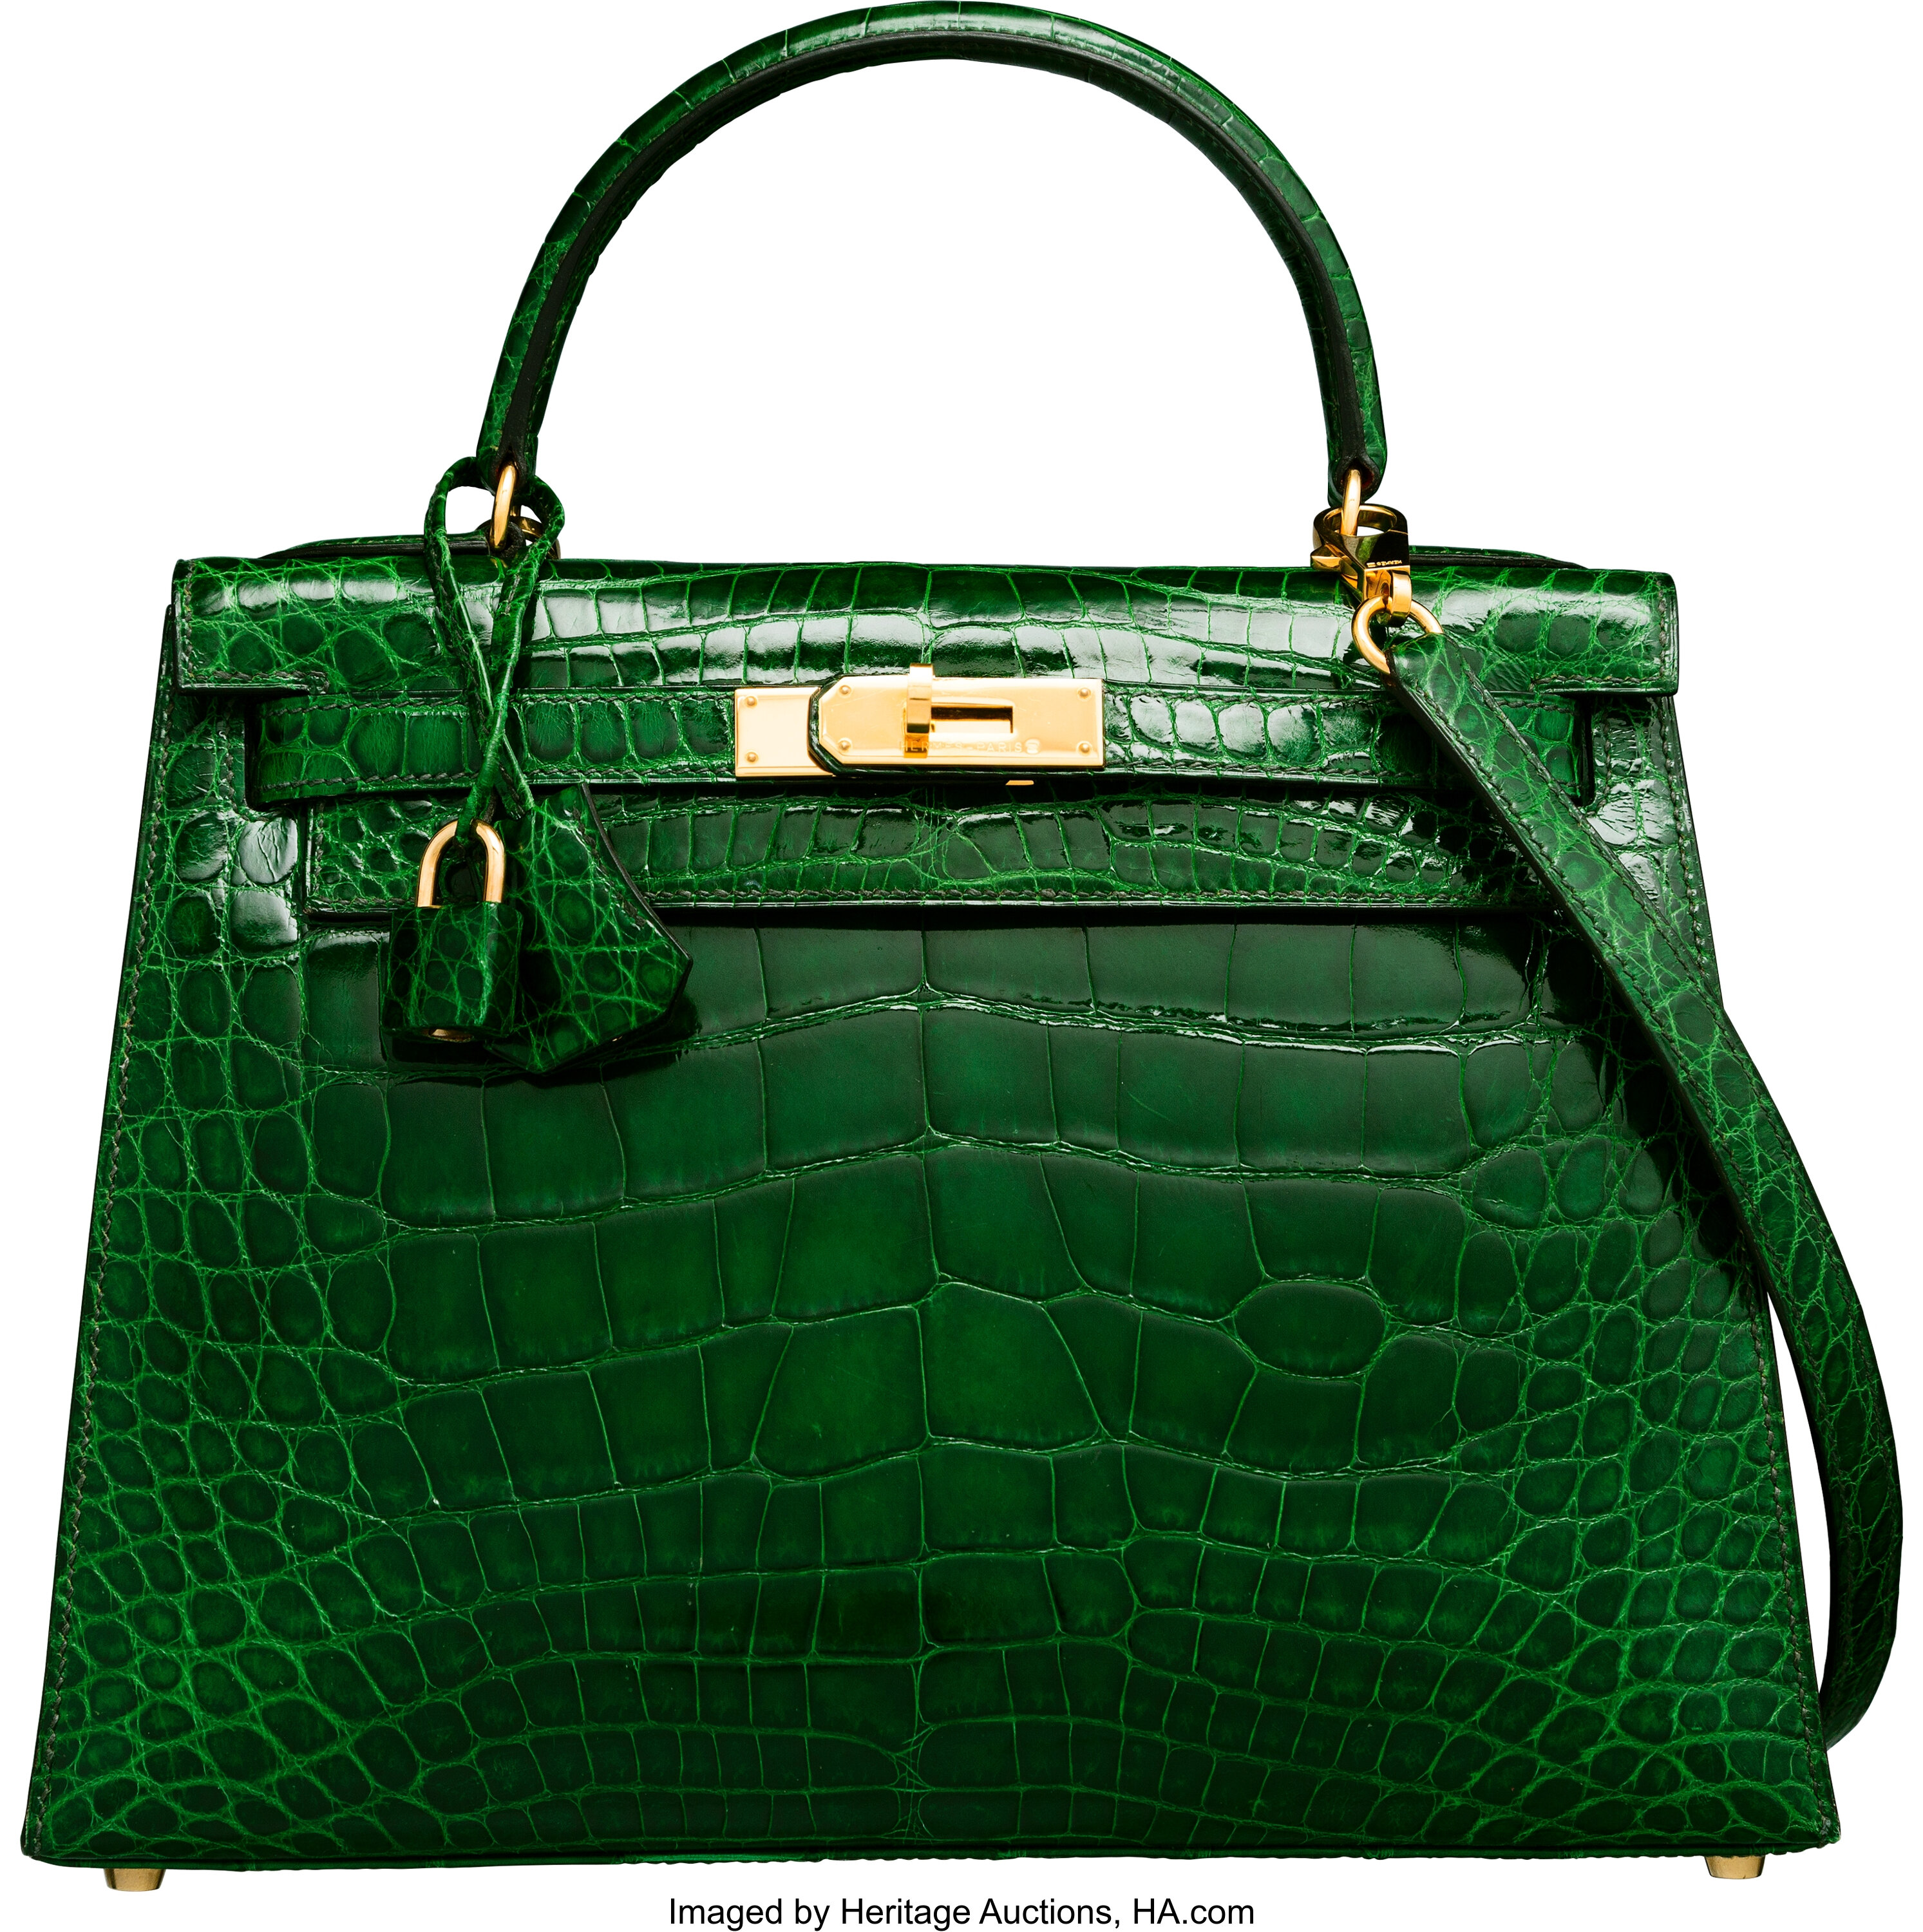 Hermes Birkin Bag, Veronese Green, 35cm, Matt alligator with gold